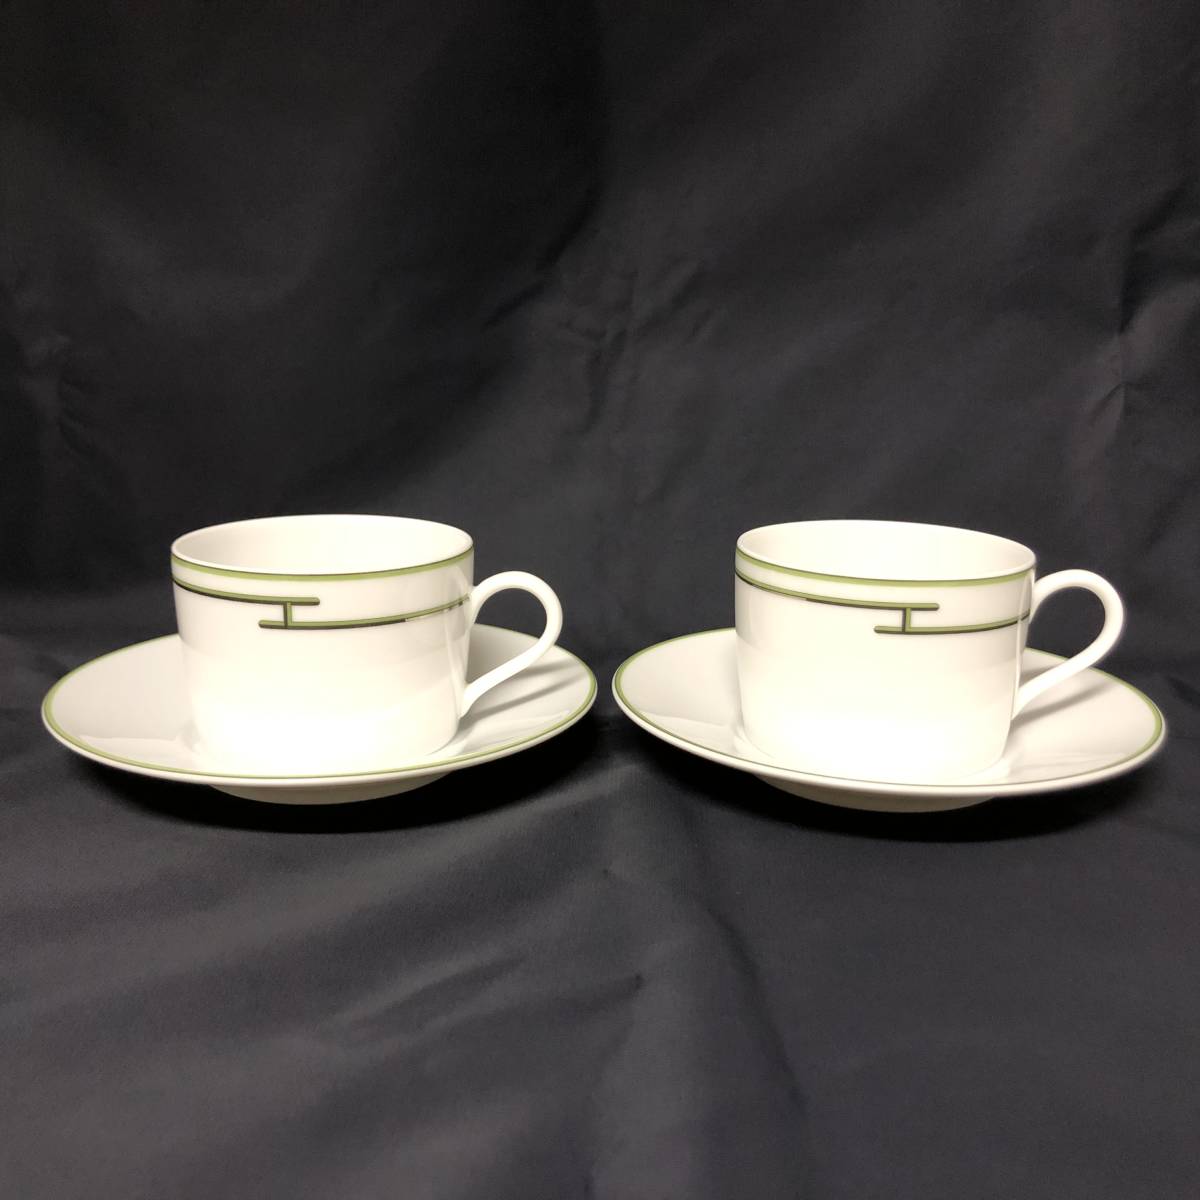 HERMES エルメス リズム ティーカップ&ソーサー 2客セット グリーン 陶器 茶器 洋食器